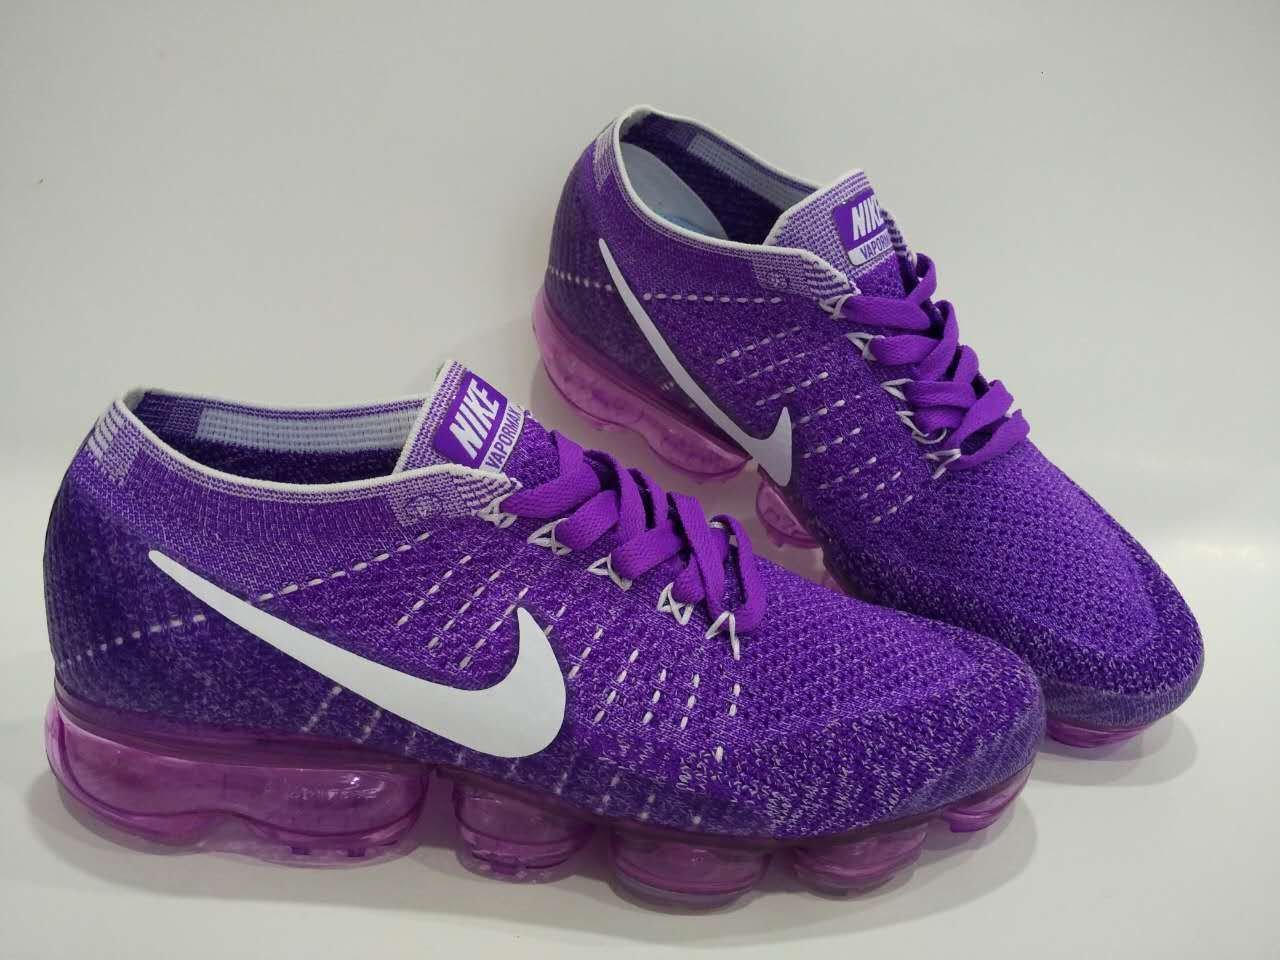 Nike фиолетовые кроссовки. Nike Flyknit Max Womens Purple. Nike VAPORMAX фиолетовые. Кроссовки Nike Flyknit Trainer 2017 'Night Purple. Найк кари 4 фиолетовые.